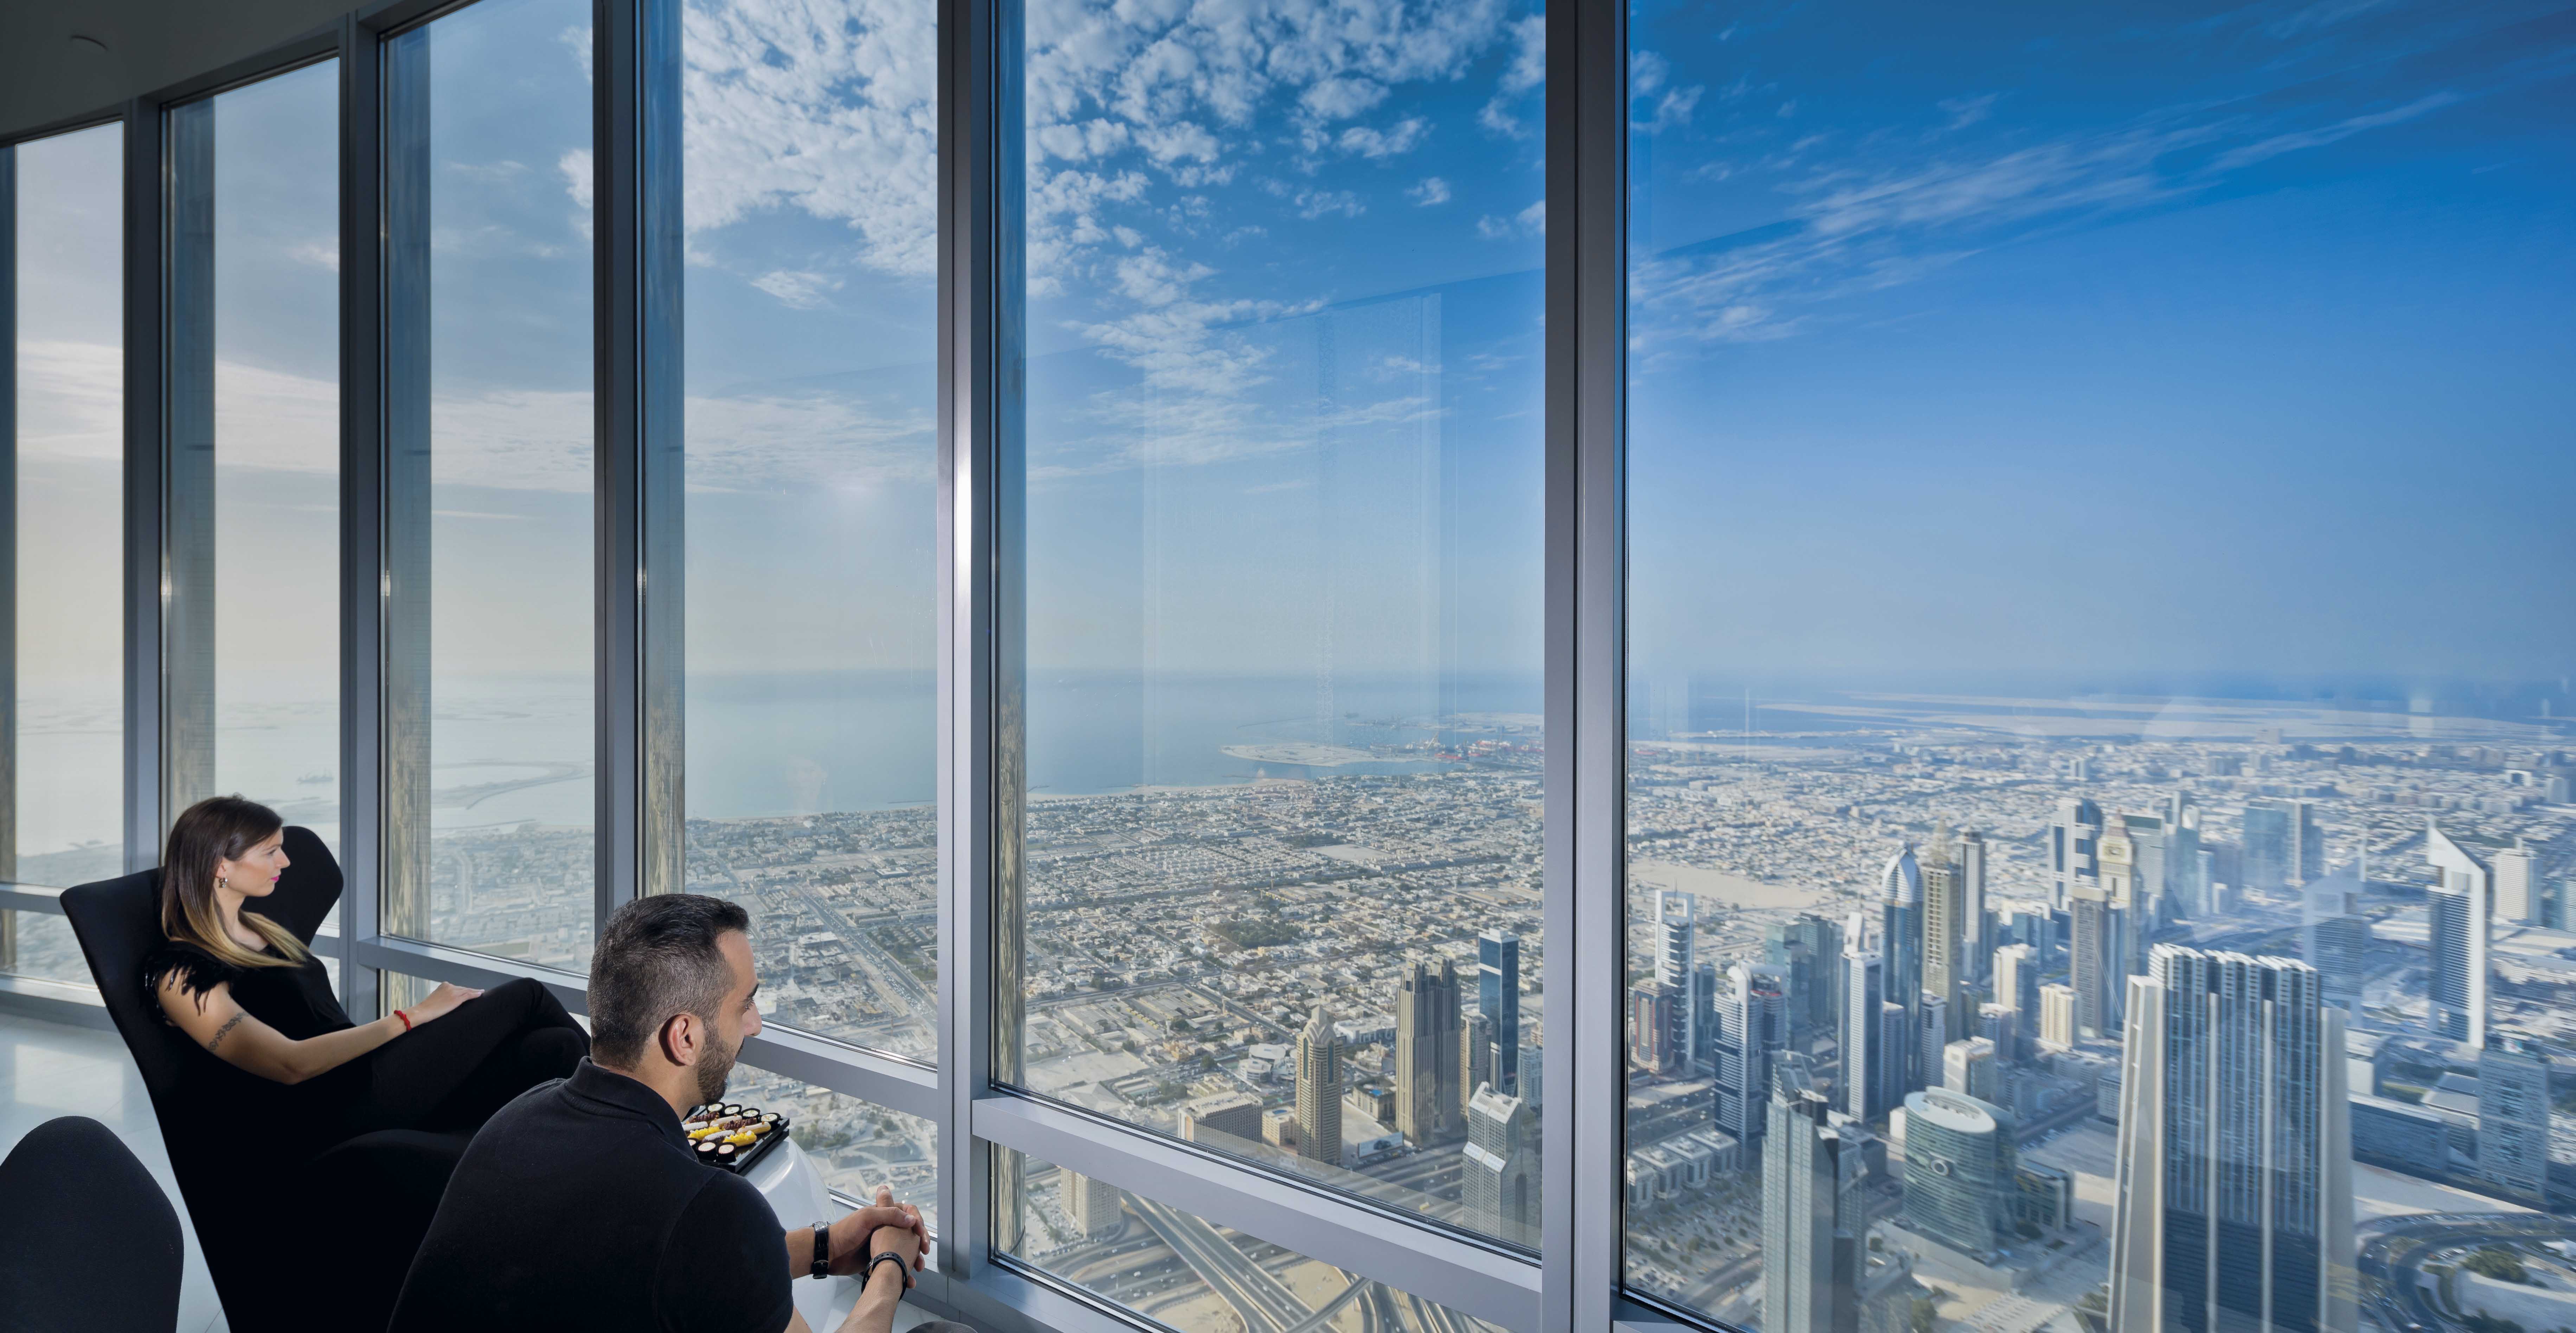 View ly. Дубай Бурдж Халифа смотровая площадка. Бурдж Халифа смотровая площадка на 148 этаже. "At the Top" Бурдж Халифа (смотровая площадка. Обзорная площадка в Бурдж Халифа 148 этаж.